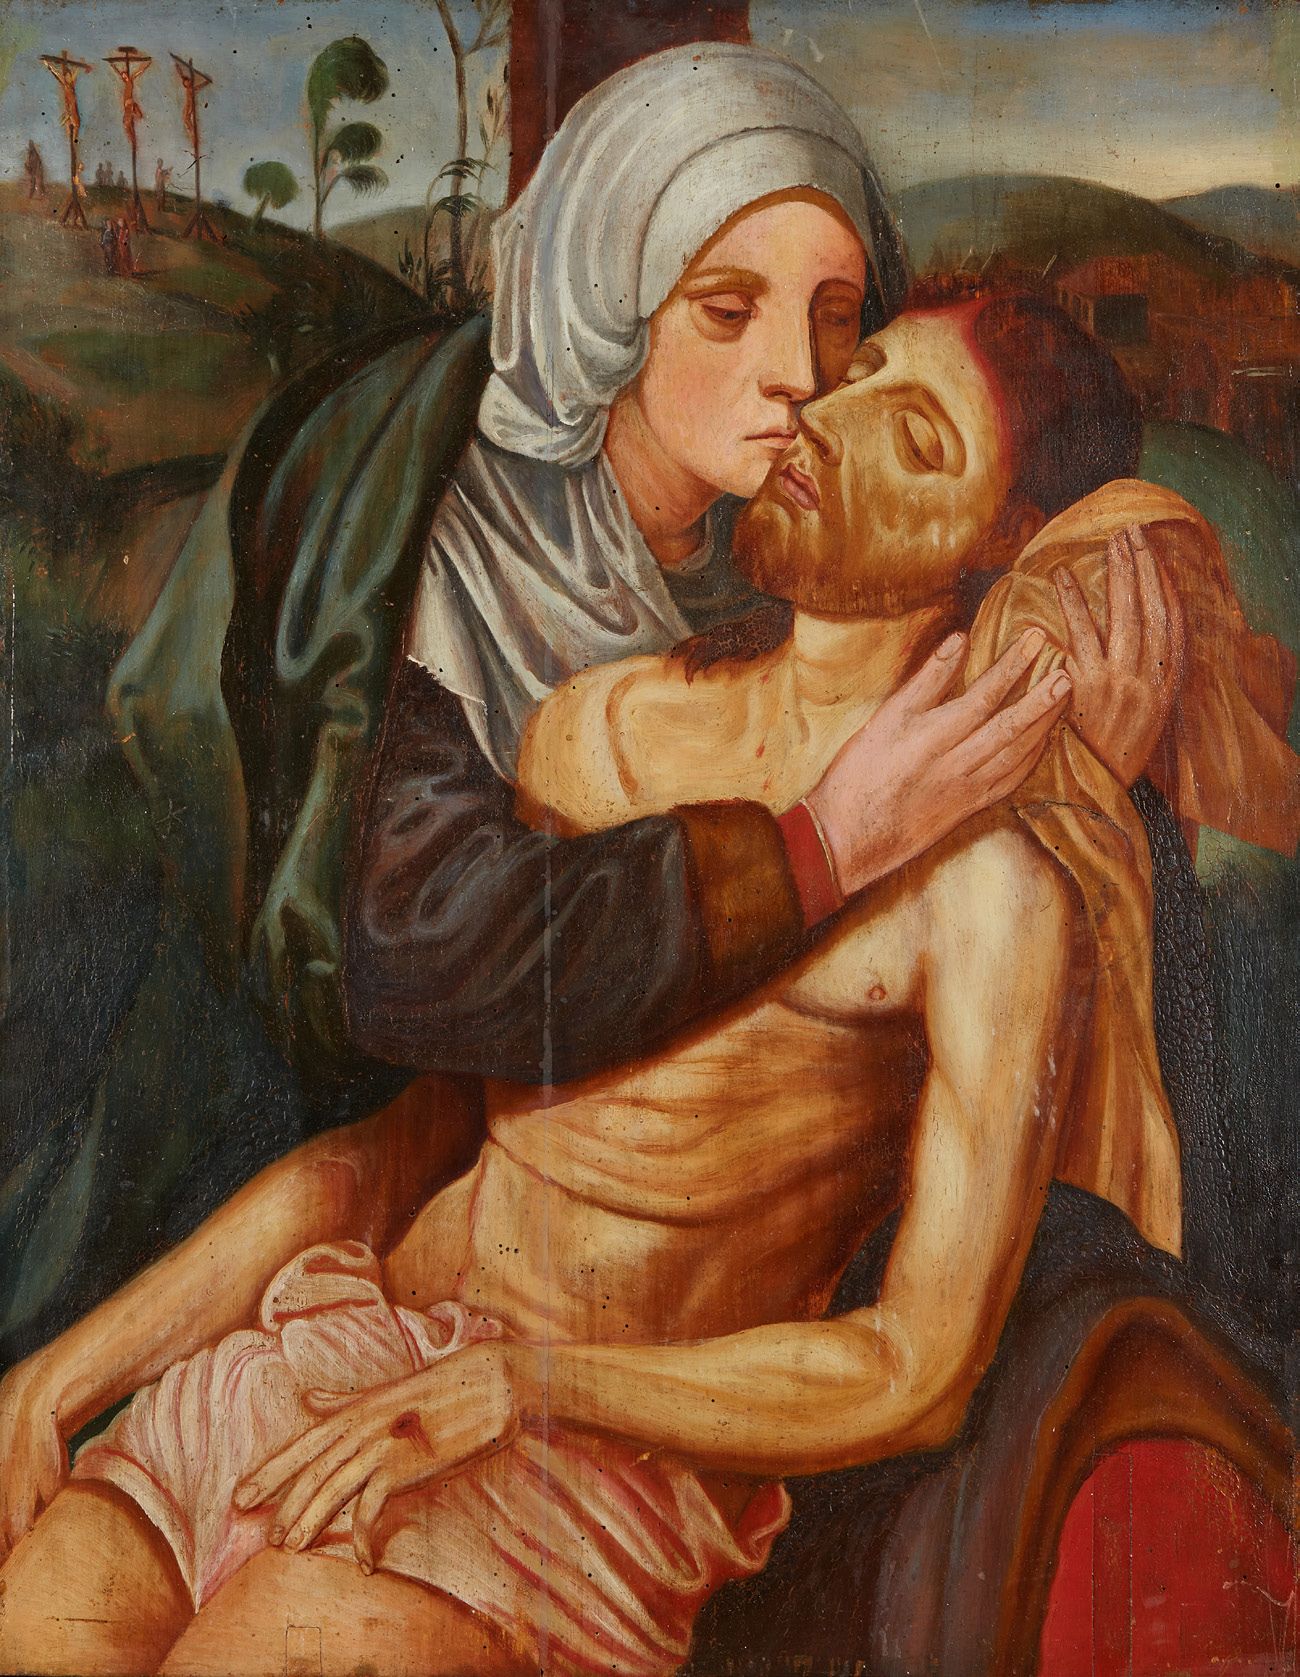 École du XIXe siècle Christus und Maria
Öl auf Leinwand 60,5 x 47,5 cm